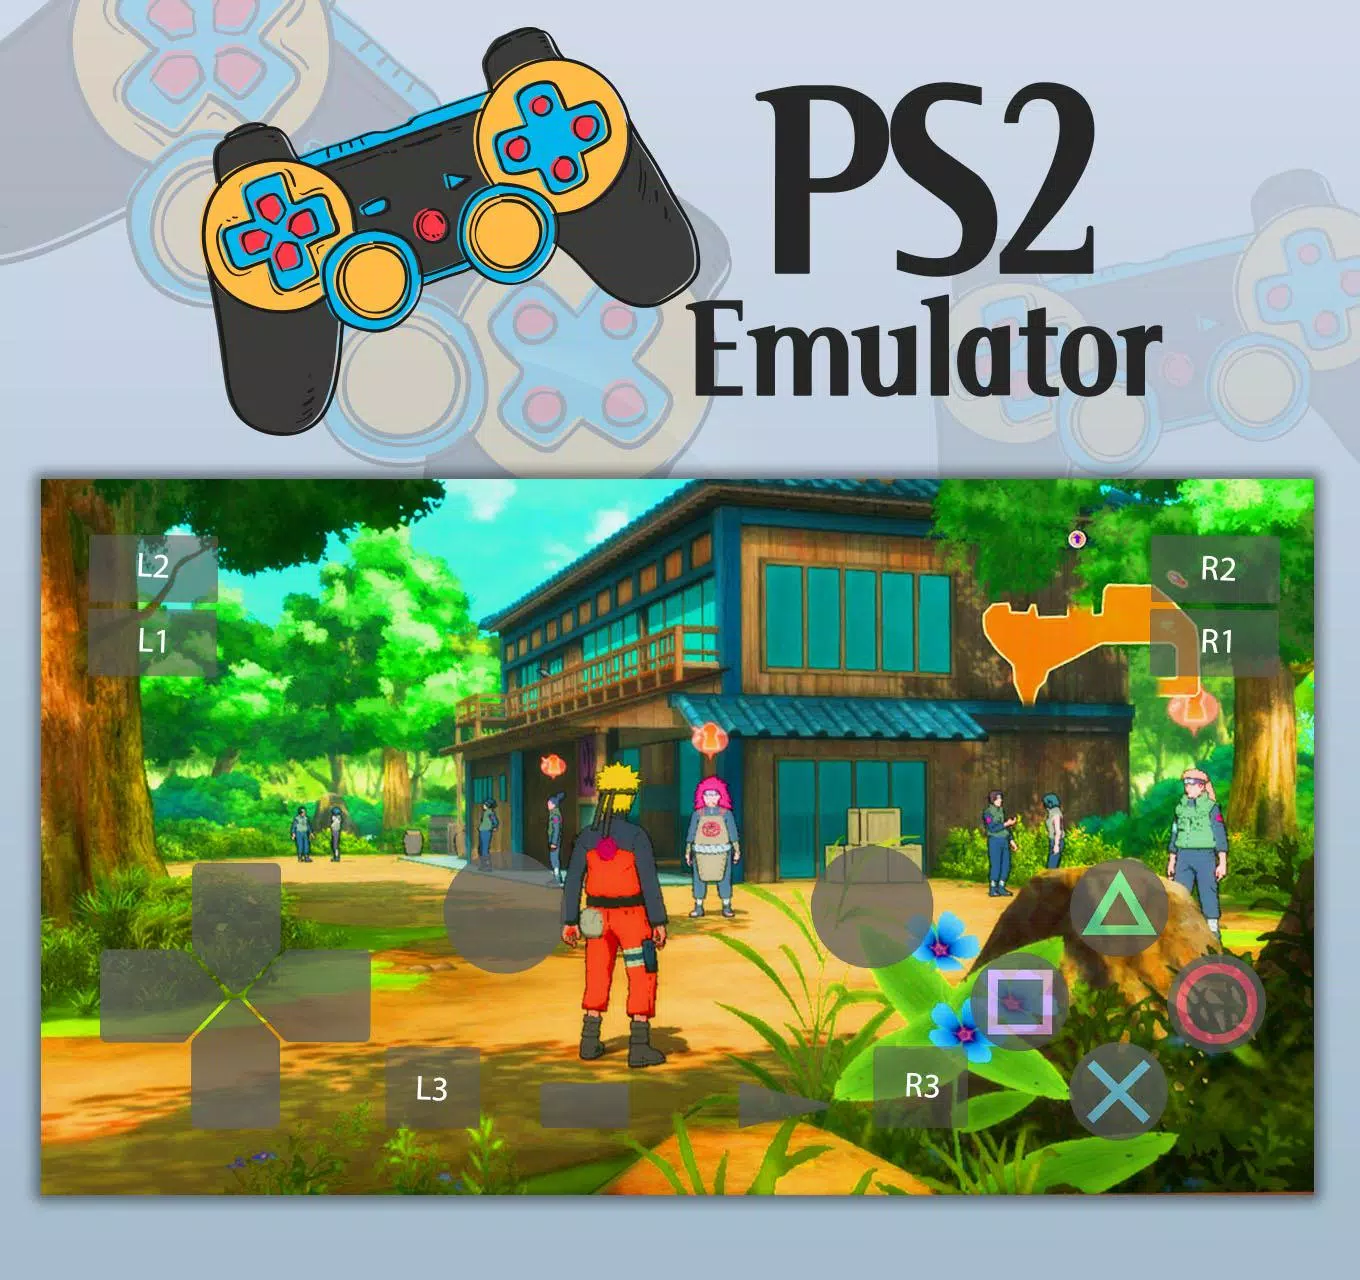 PS2 ROMs FREE - Playstation 2 ROMs - Emulator Games